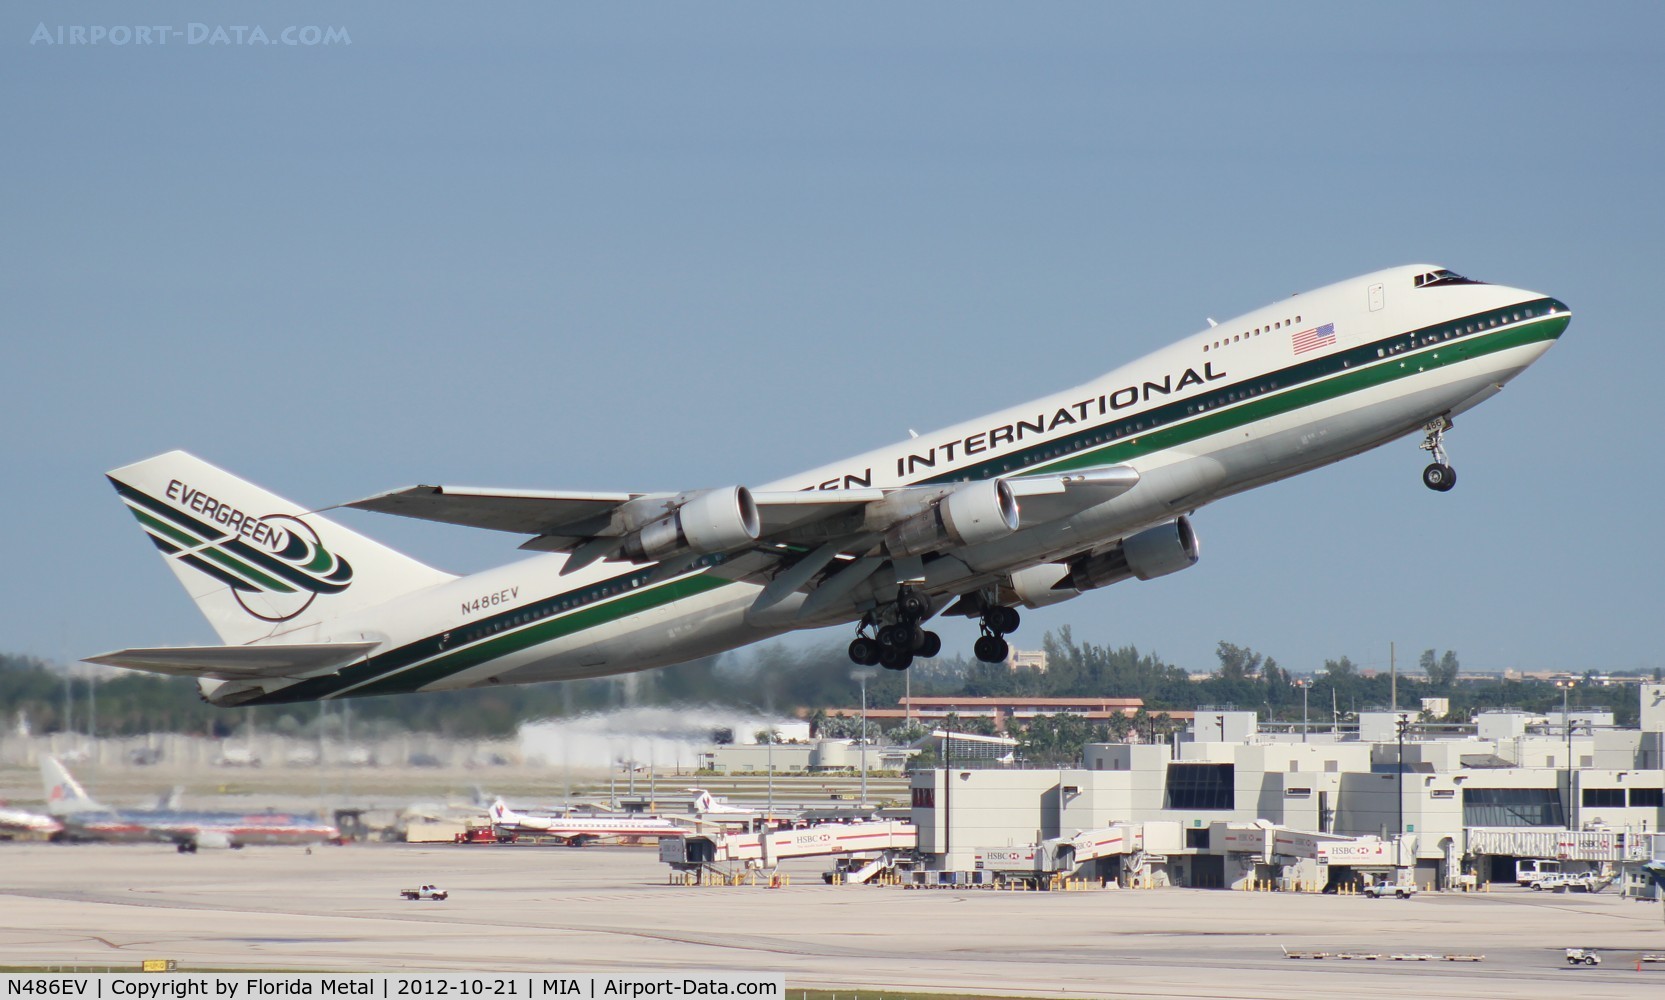 N486EV, 1974 Boeing 747-212B C/N 20888, Evergreen 747-200